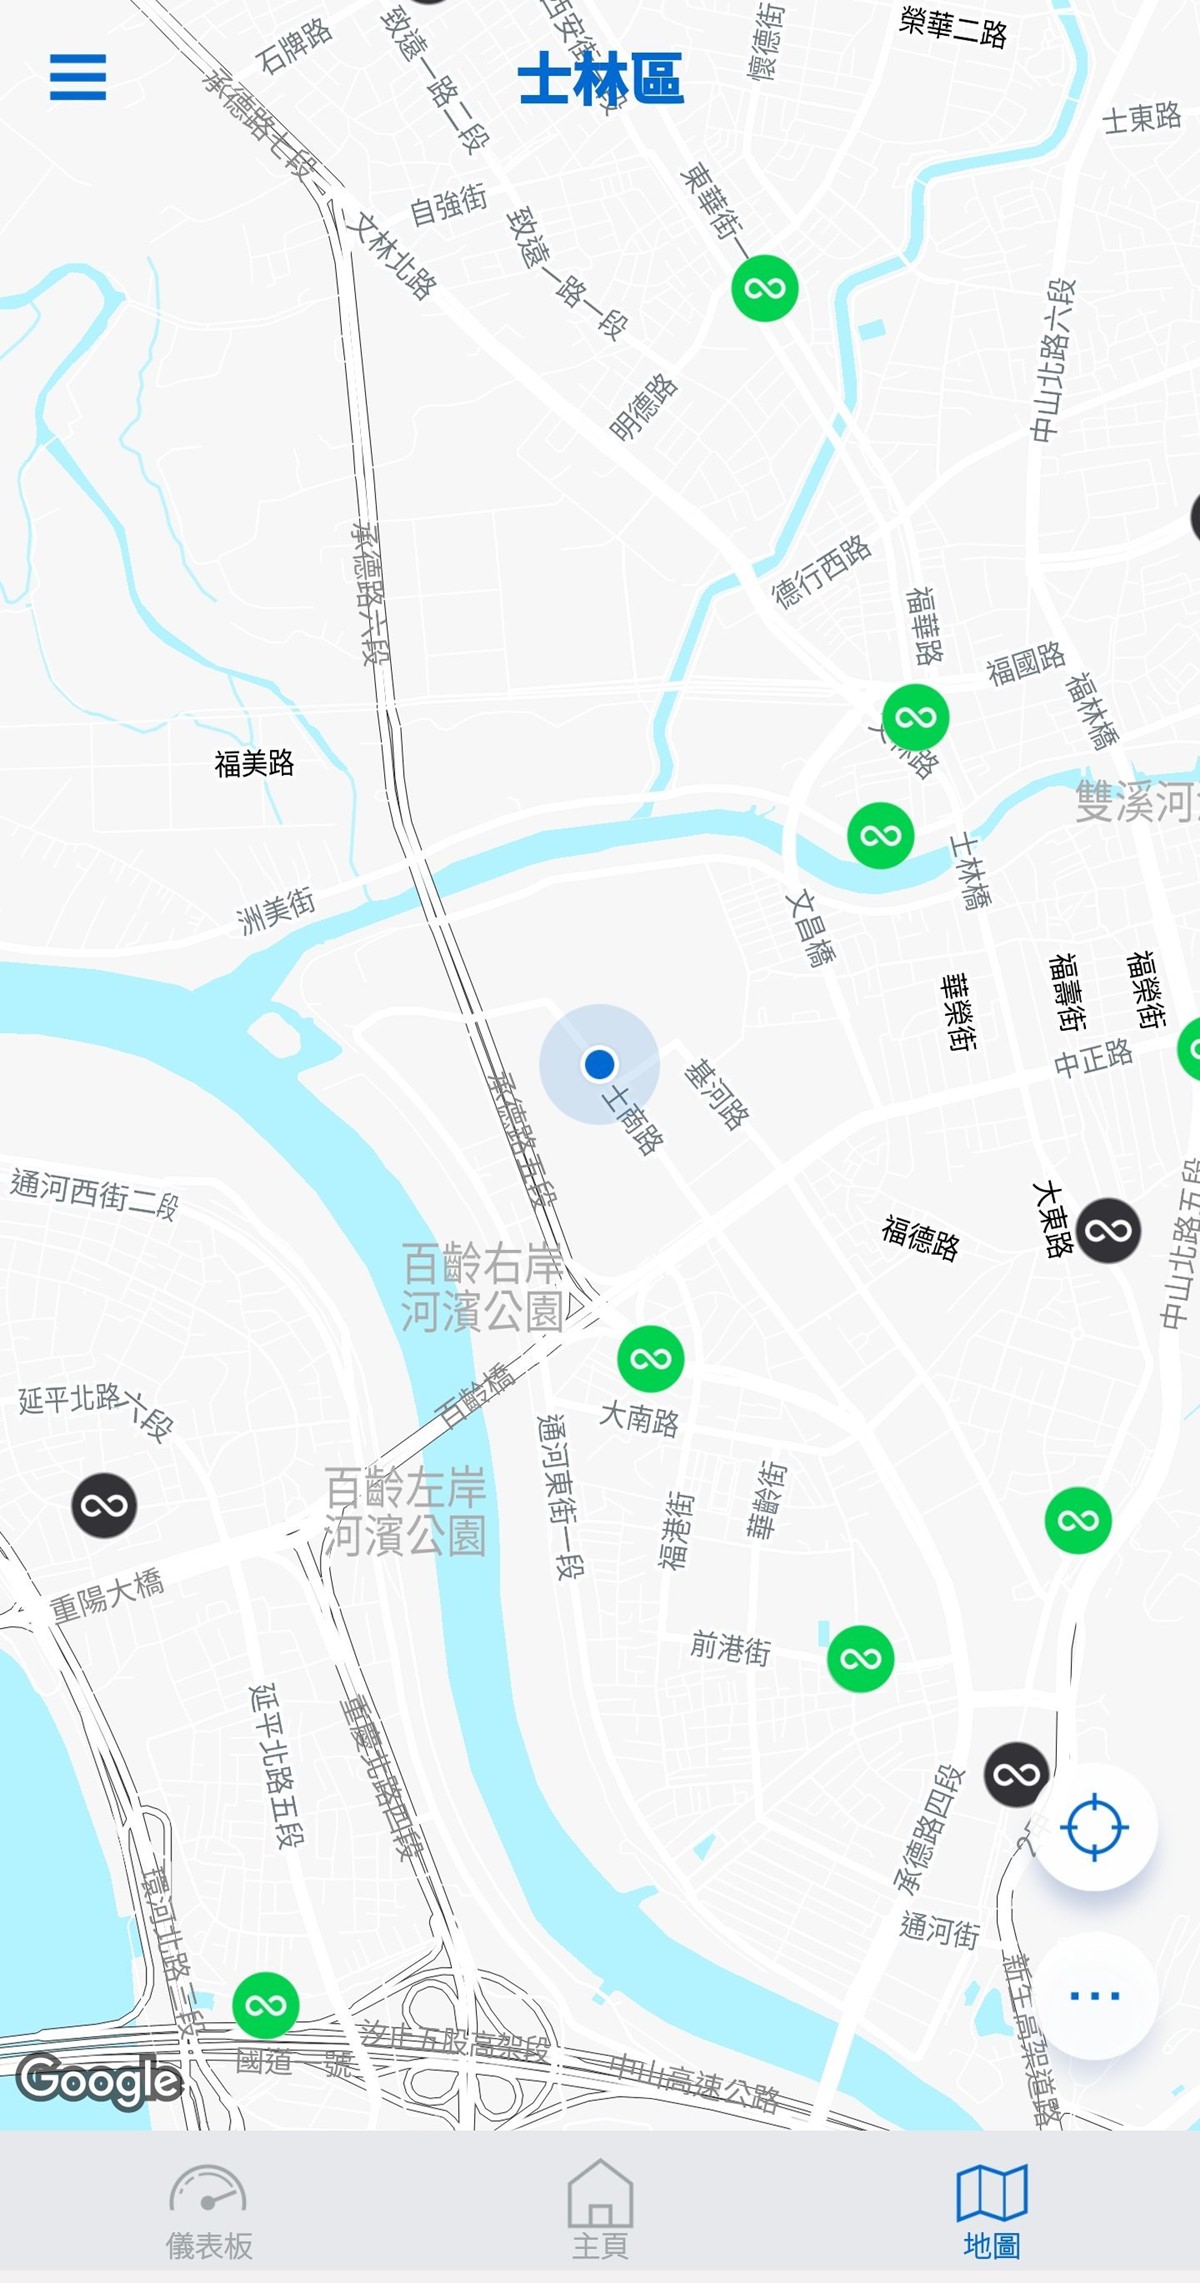 Gogoro Network新功能讓妳找好站再出發/利用Green Pin綠點功能事先規劃旅程~輕鬆帶小孩出遊